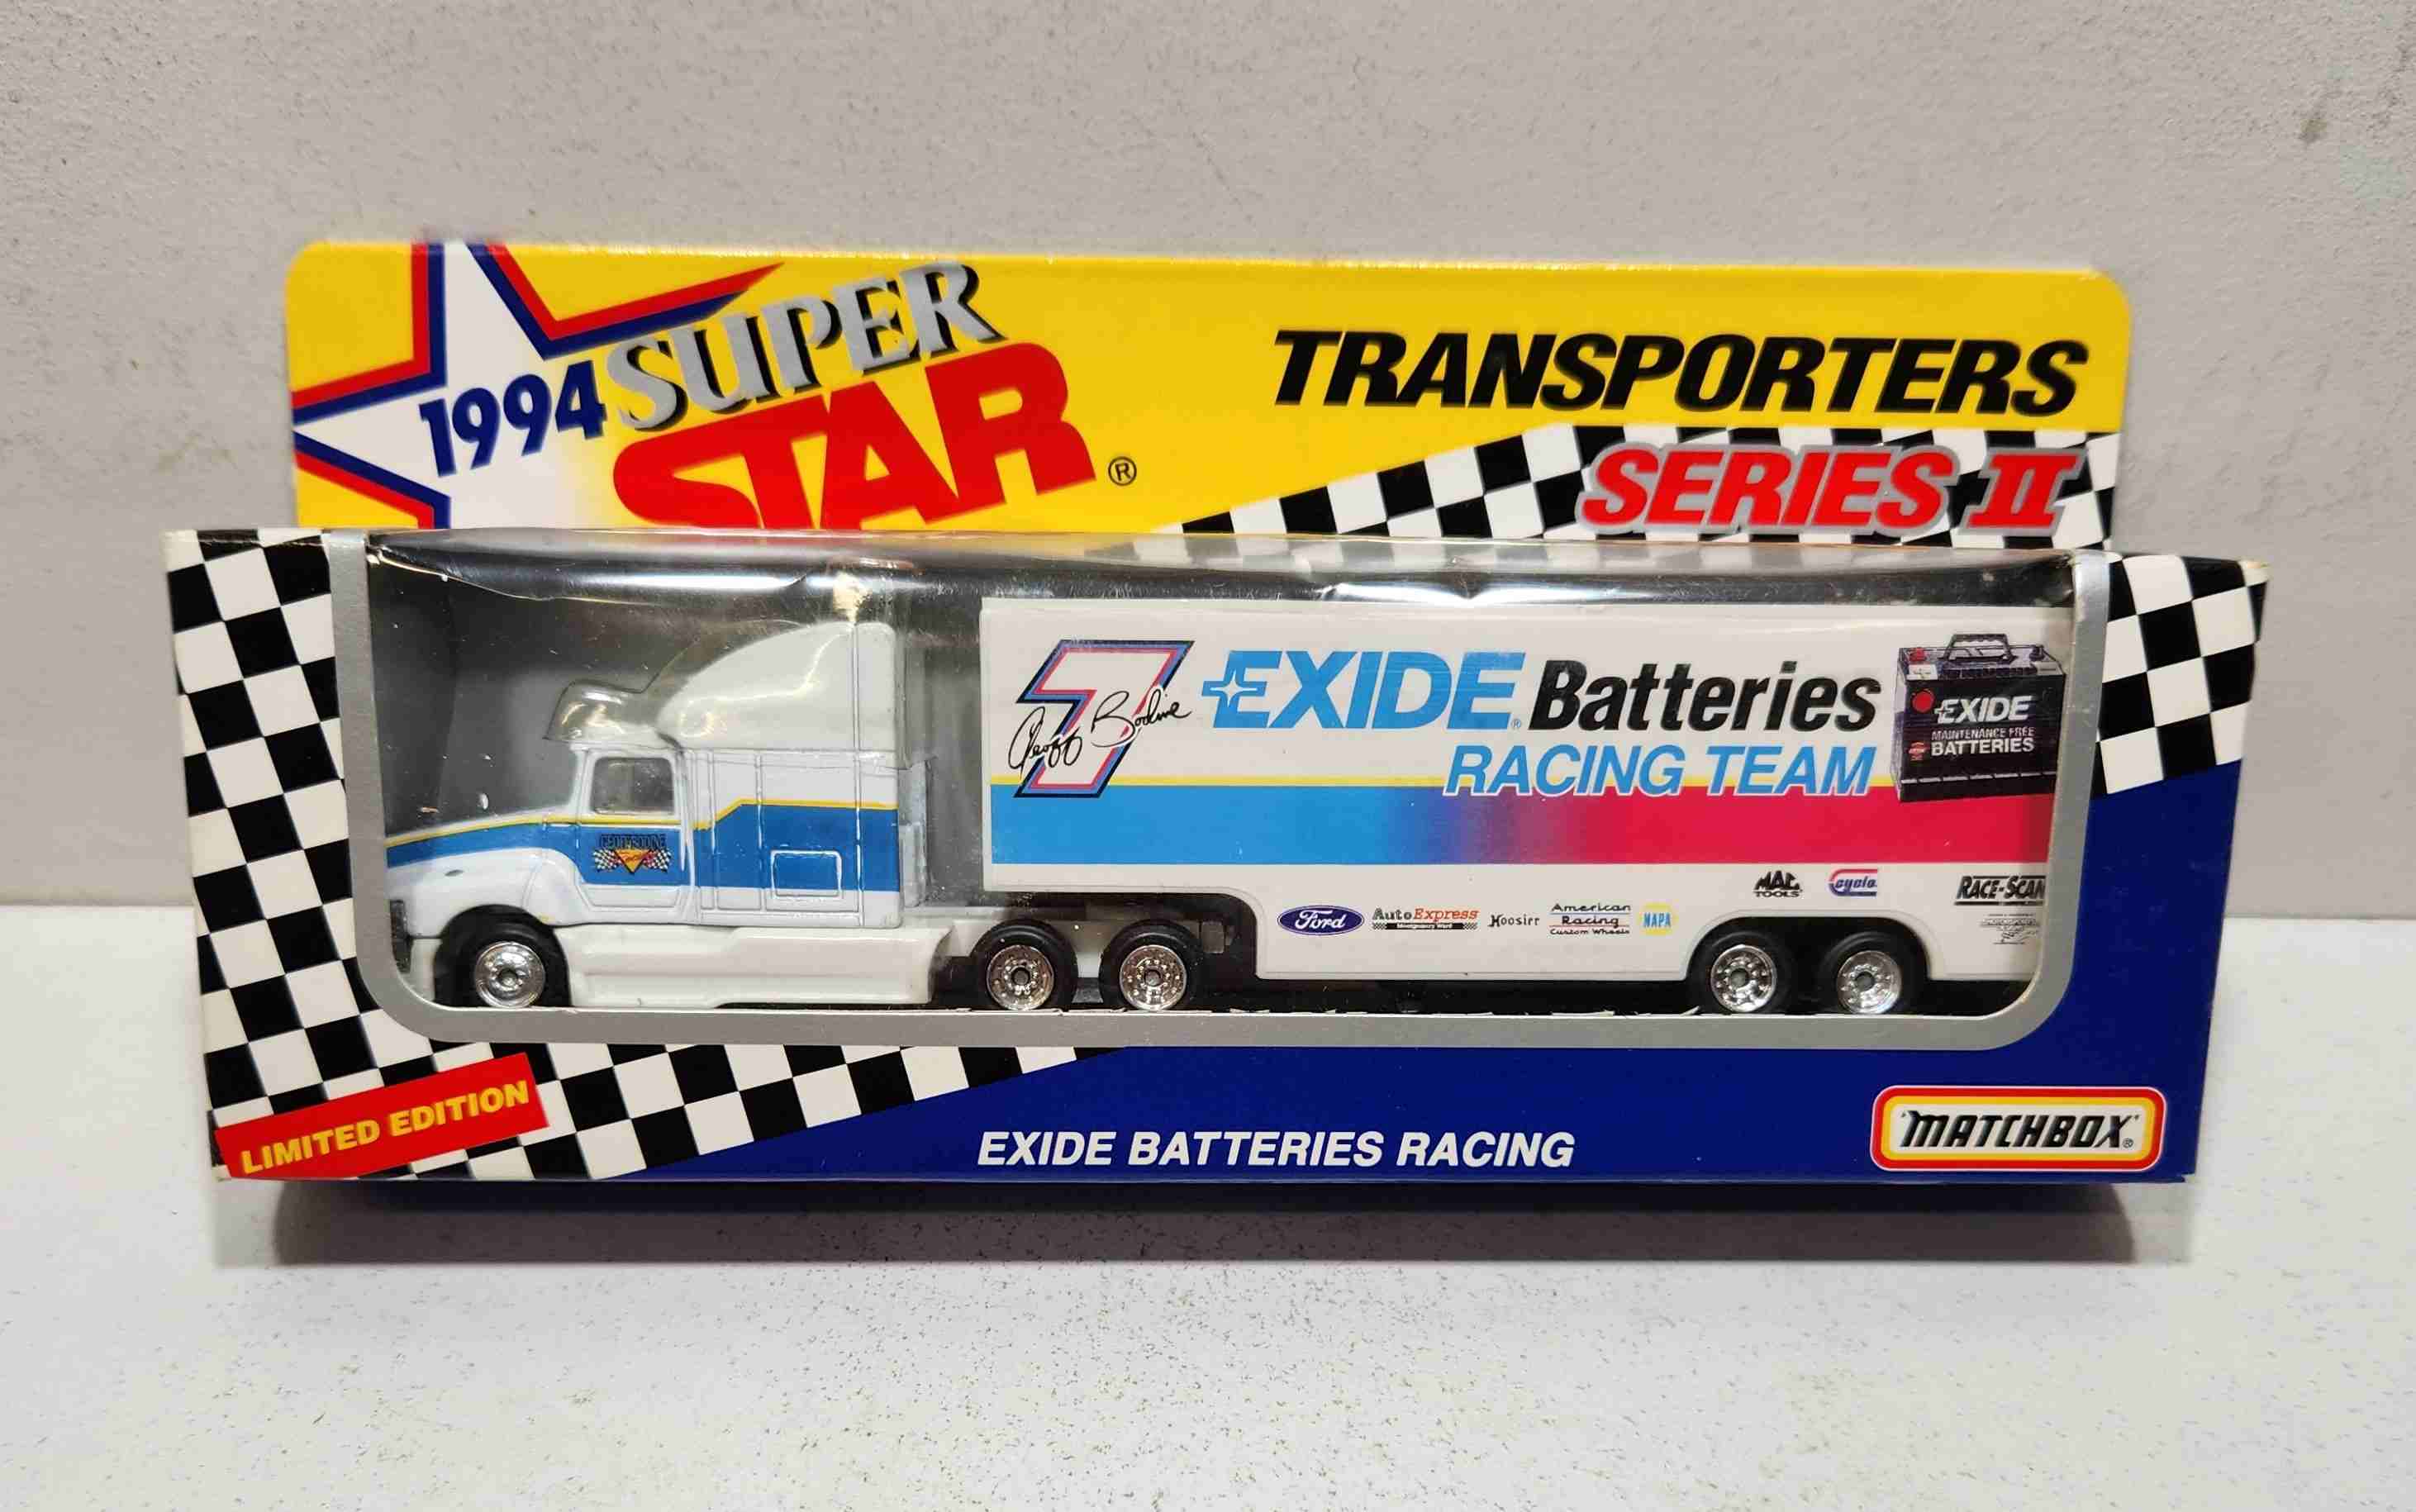 1994 Geoff Bodine 1/80th Exide Batteries Transporter